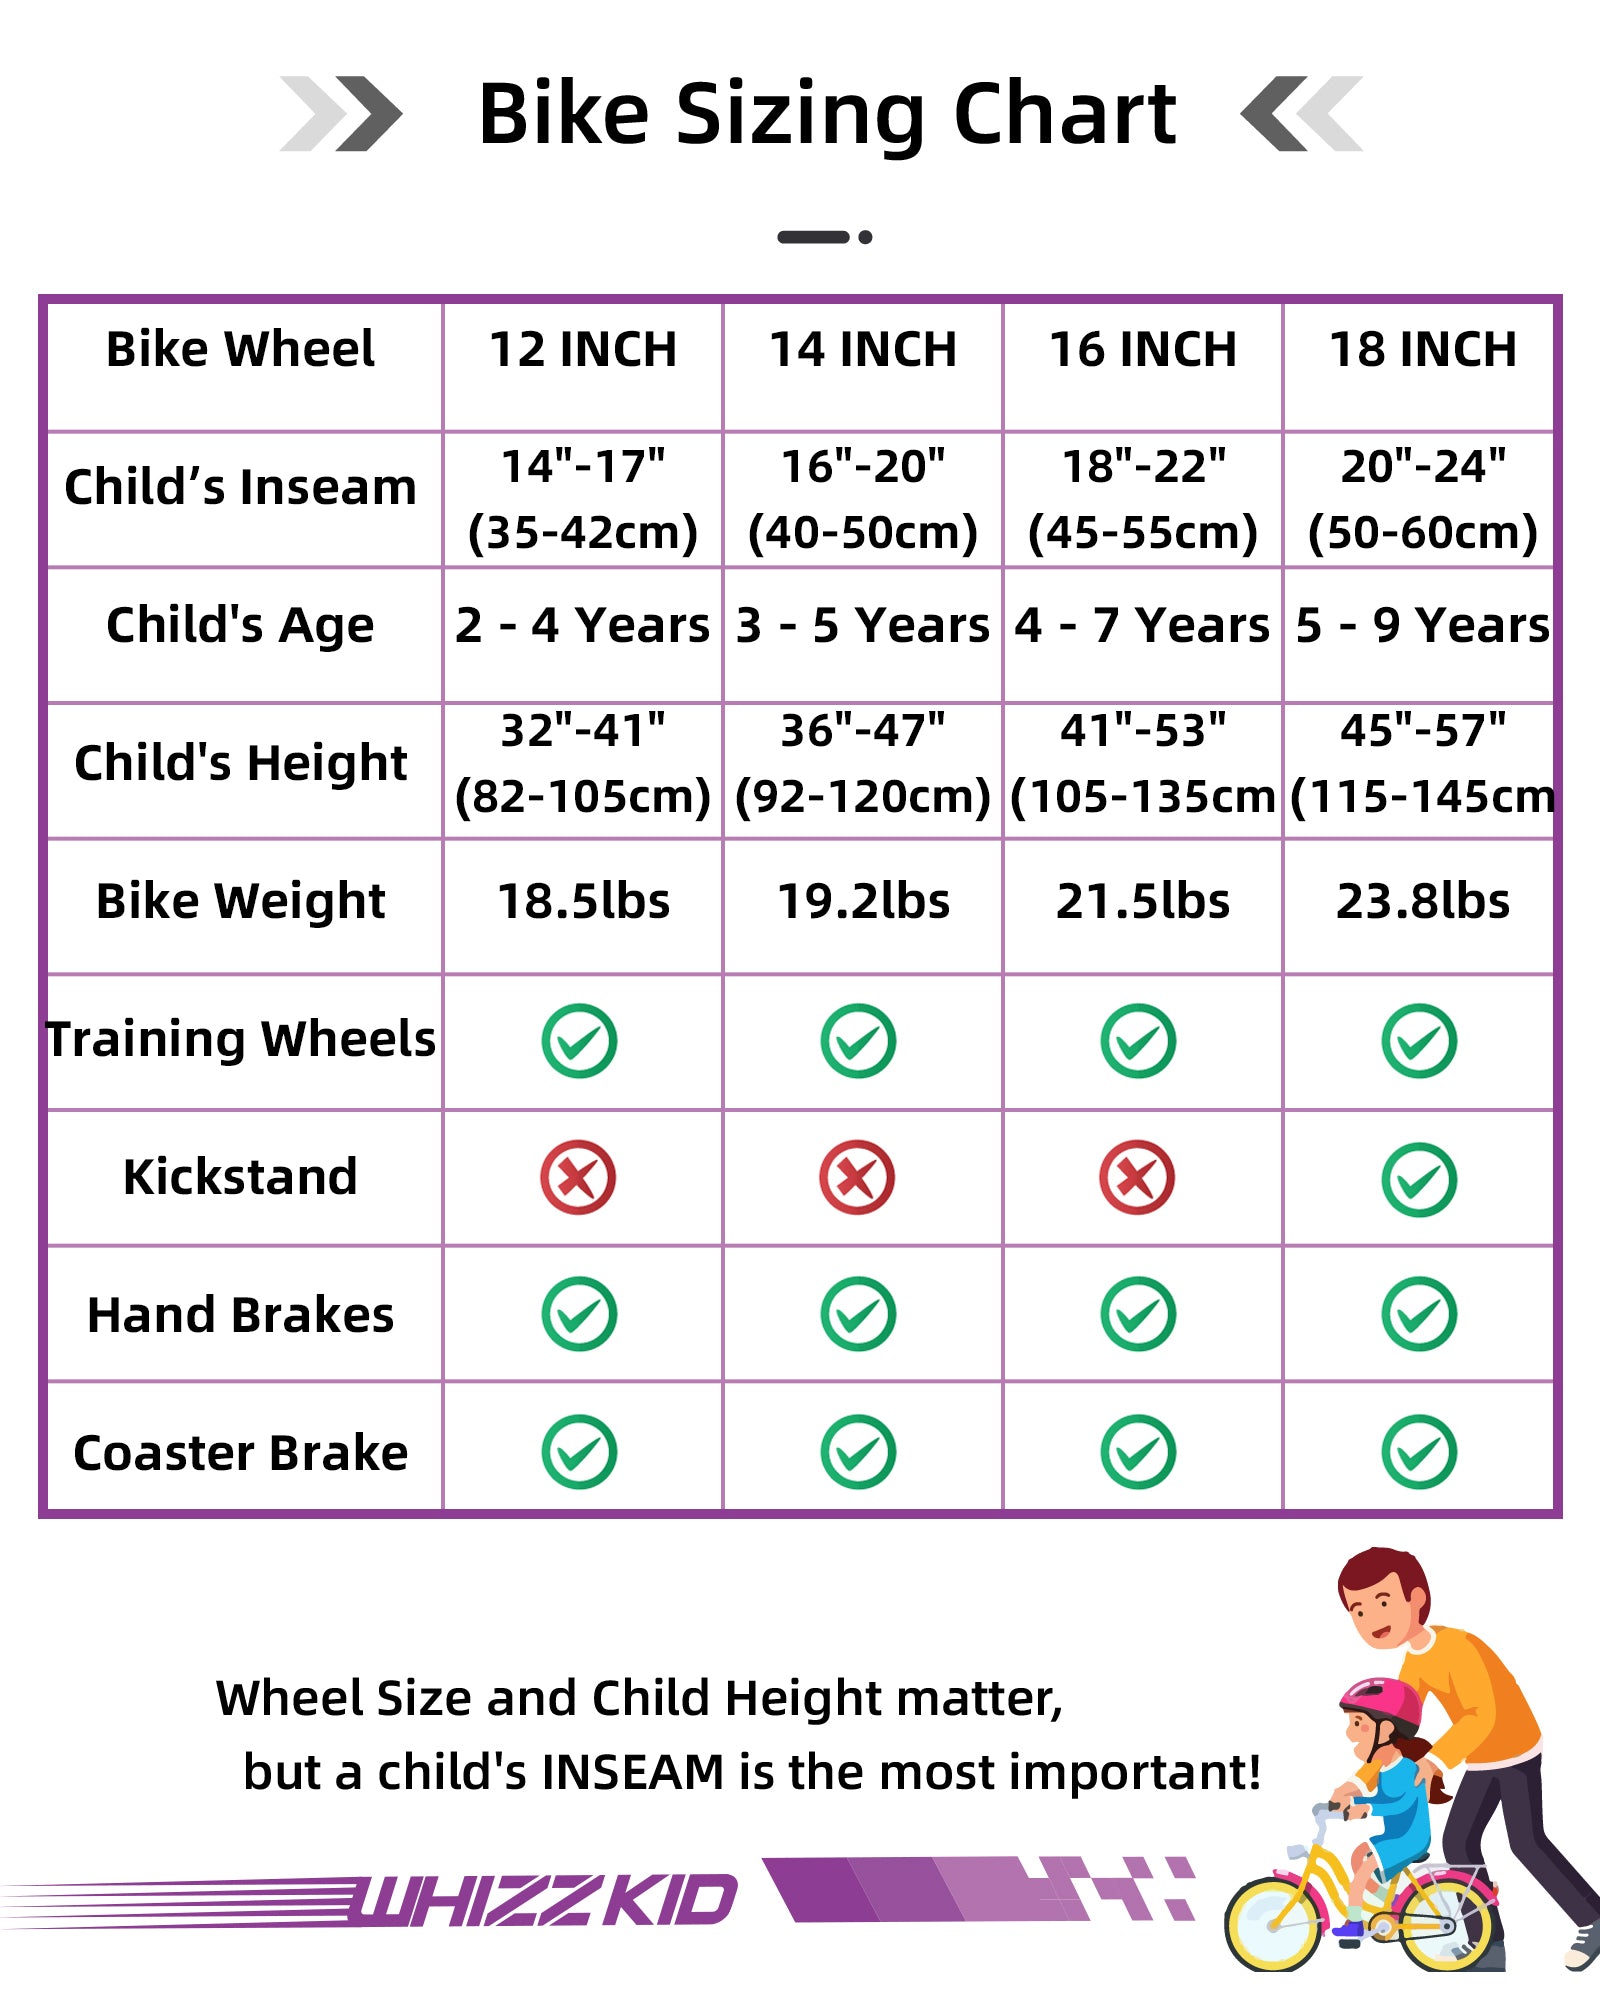 JOYSTAR WHIZZ Unisex Kids Bike